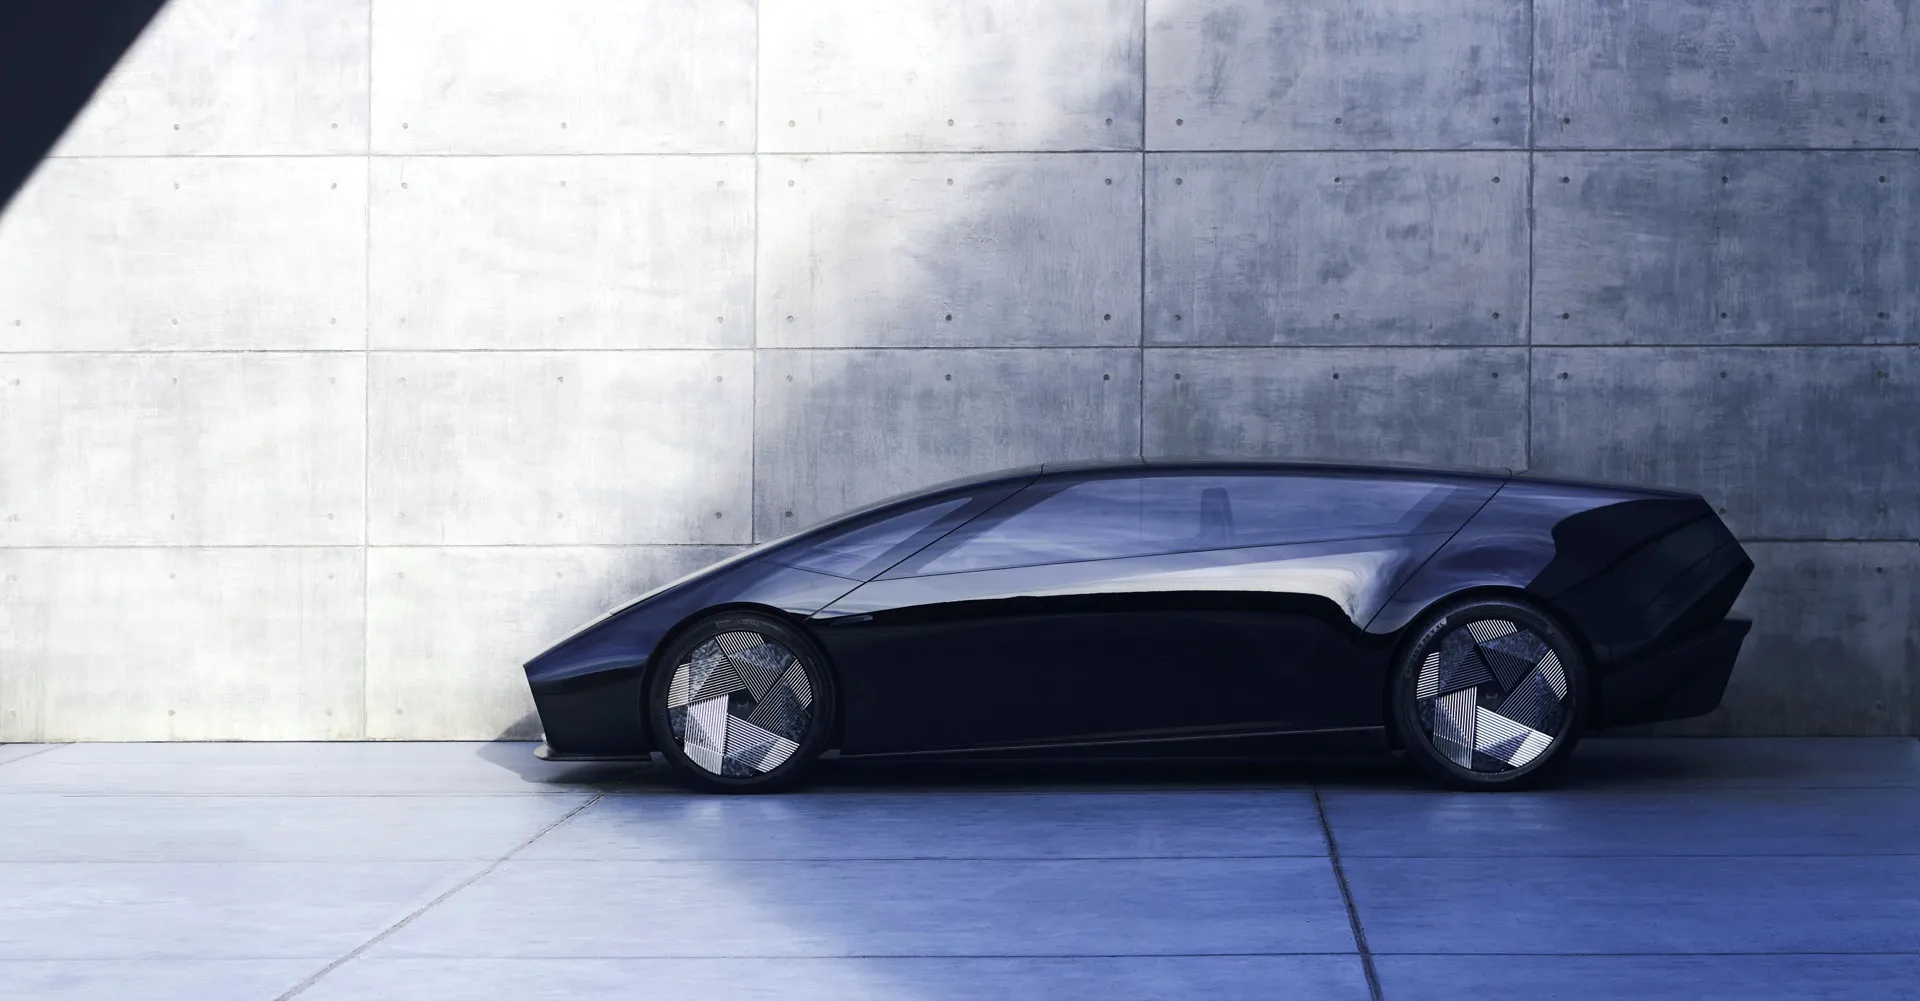 Honda Saloon concept, VinFast VF Wild concept: Car News Headlines Auto Recent